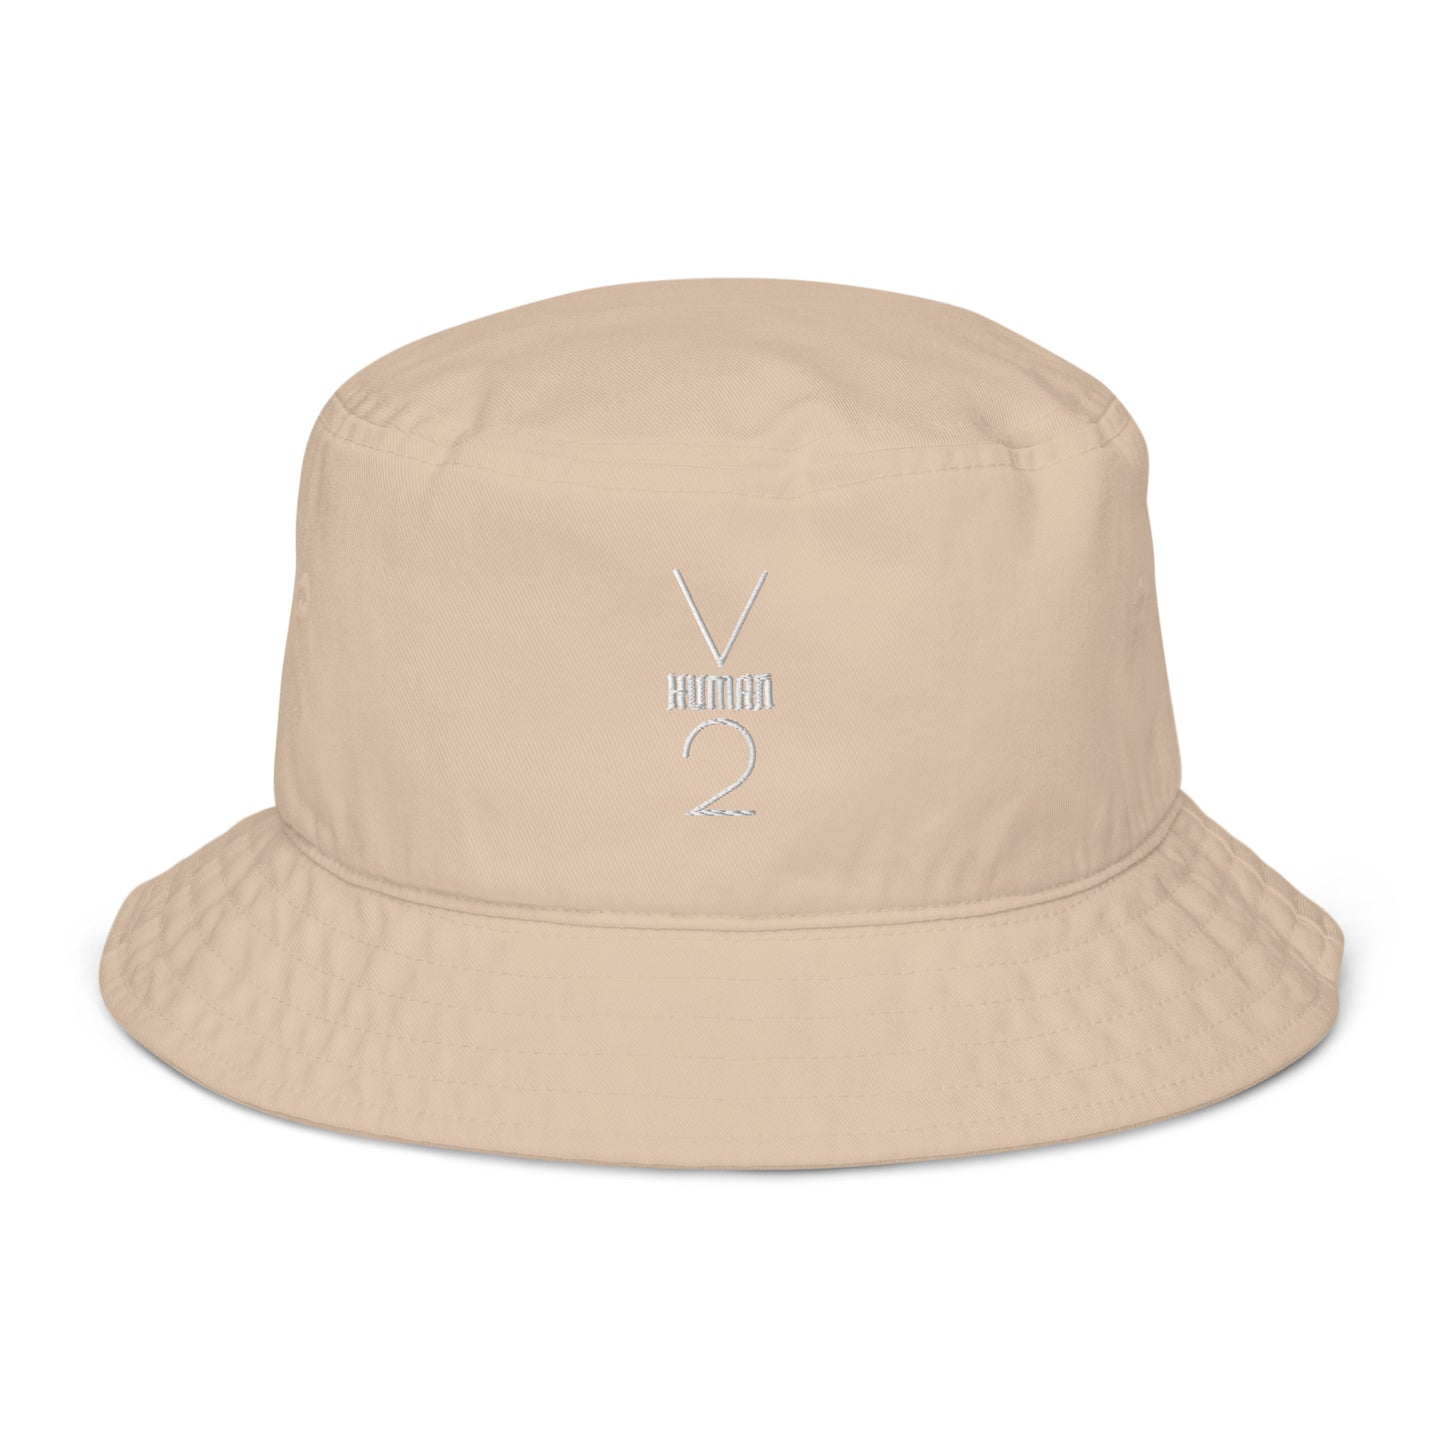 "Human V2" Organic bucket hat